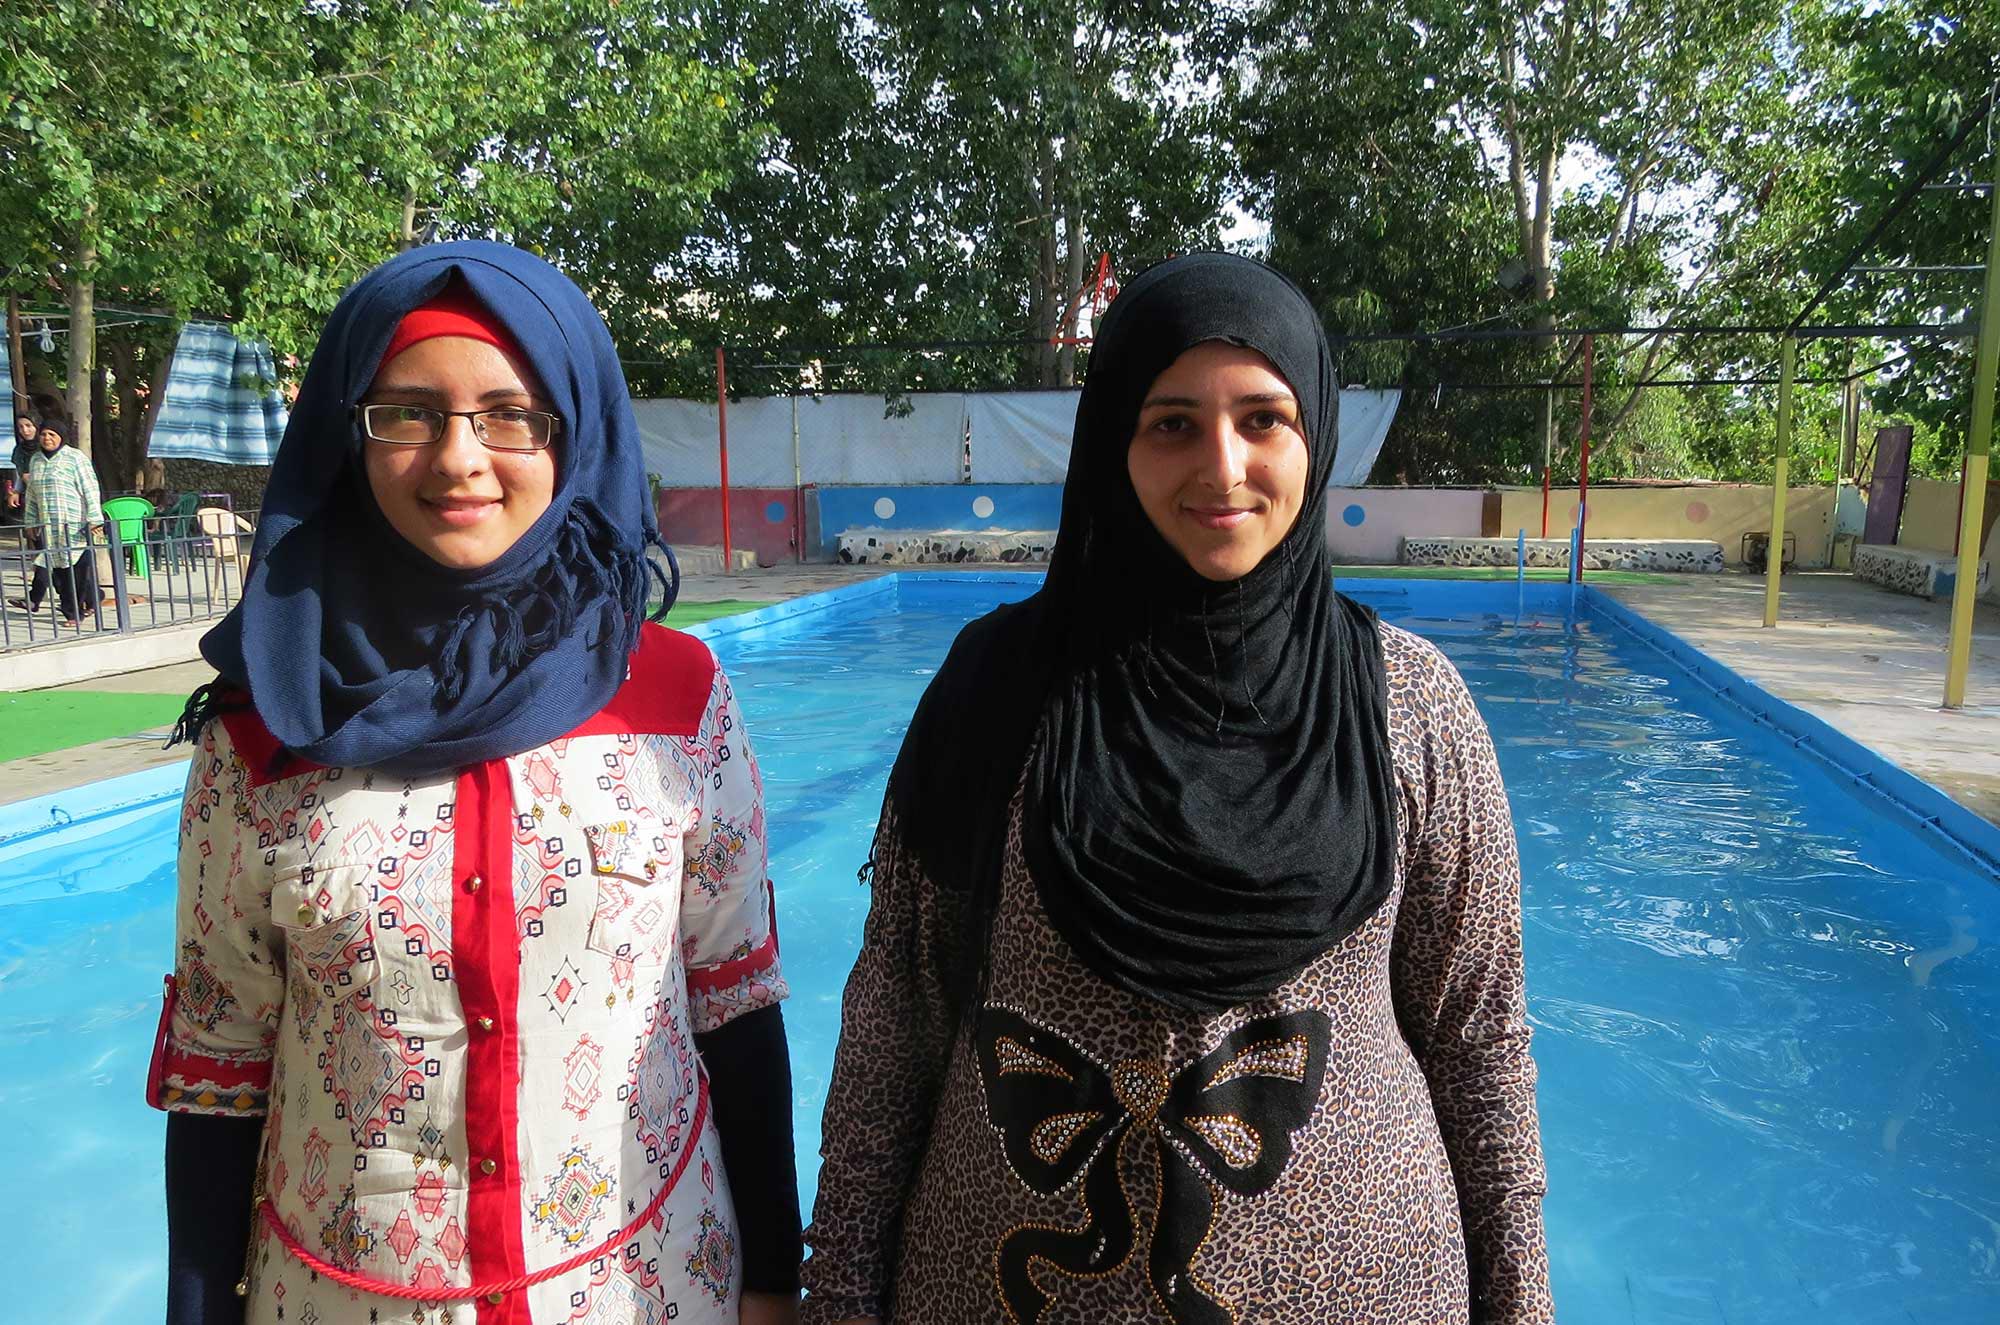 Twenty-five year-old Hanaa Hilal poses poolside with her friend at Hittine Swimming Club.